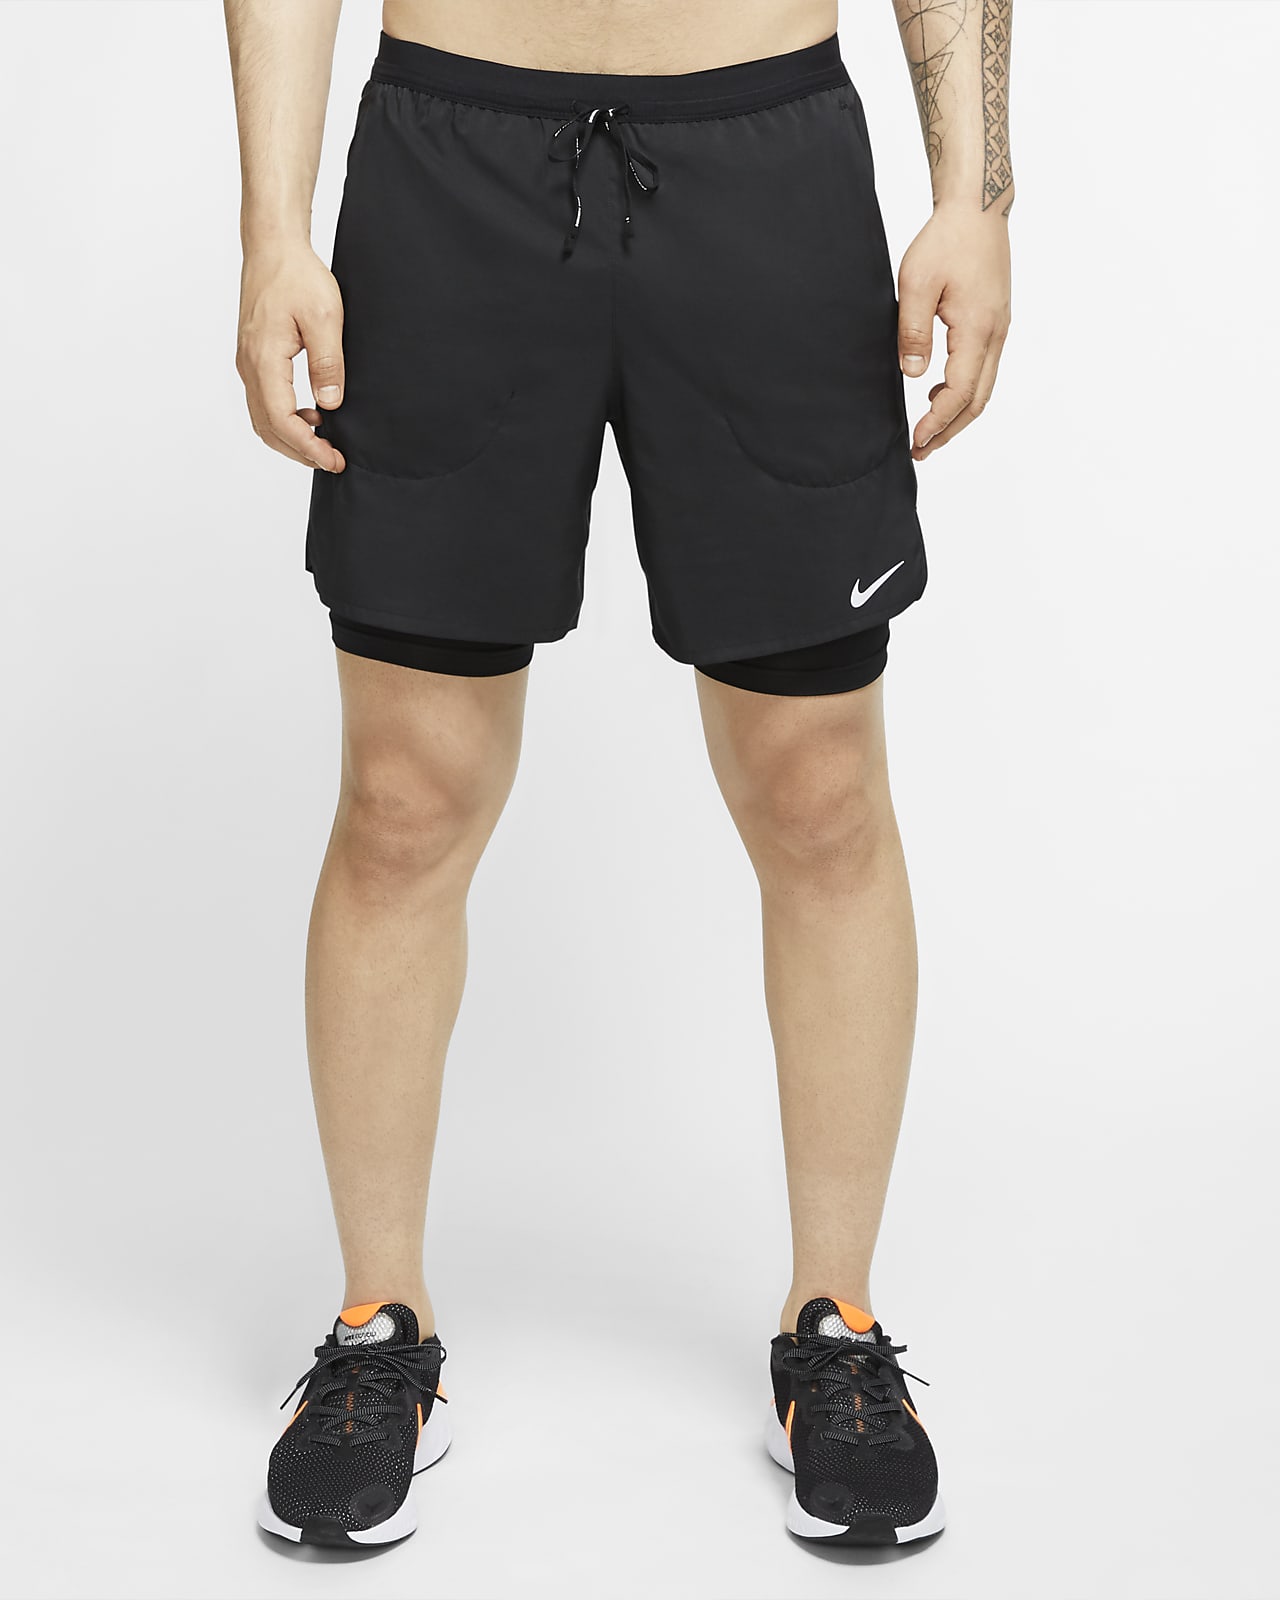 Nike公式 ナイキ フレックス ストライド メンズ 18cm 2イン1 ランニングショートパンツ オンラインストア 通販サイト